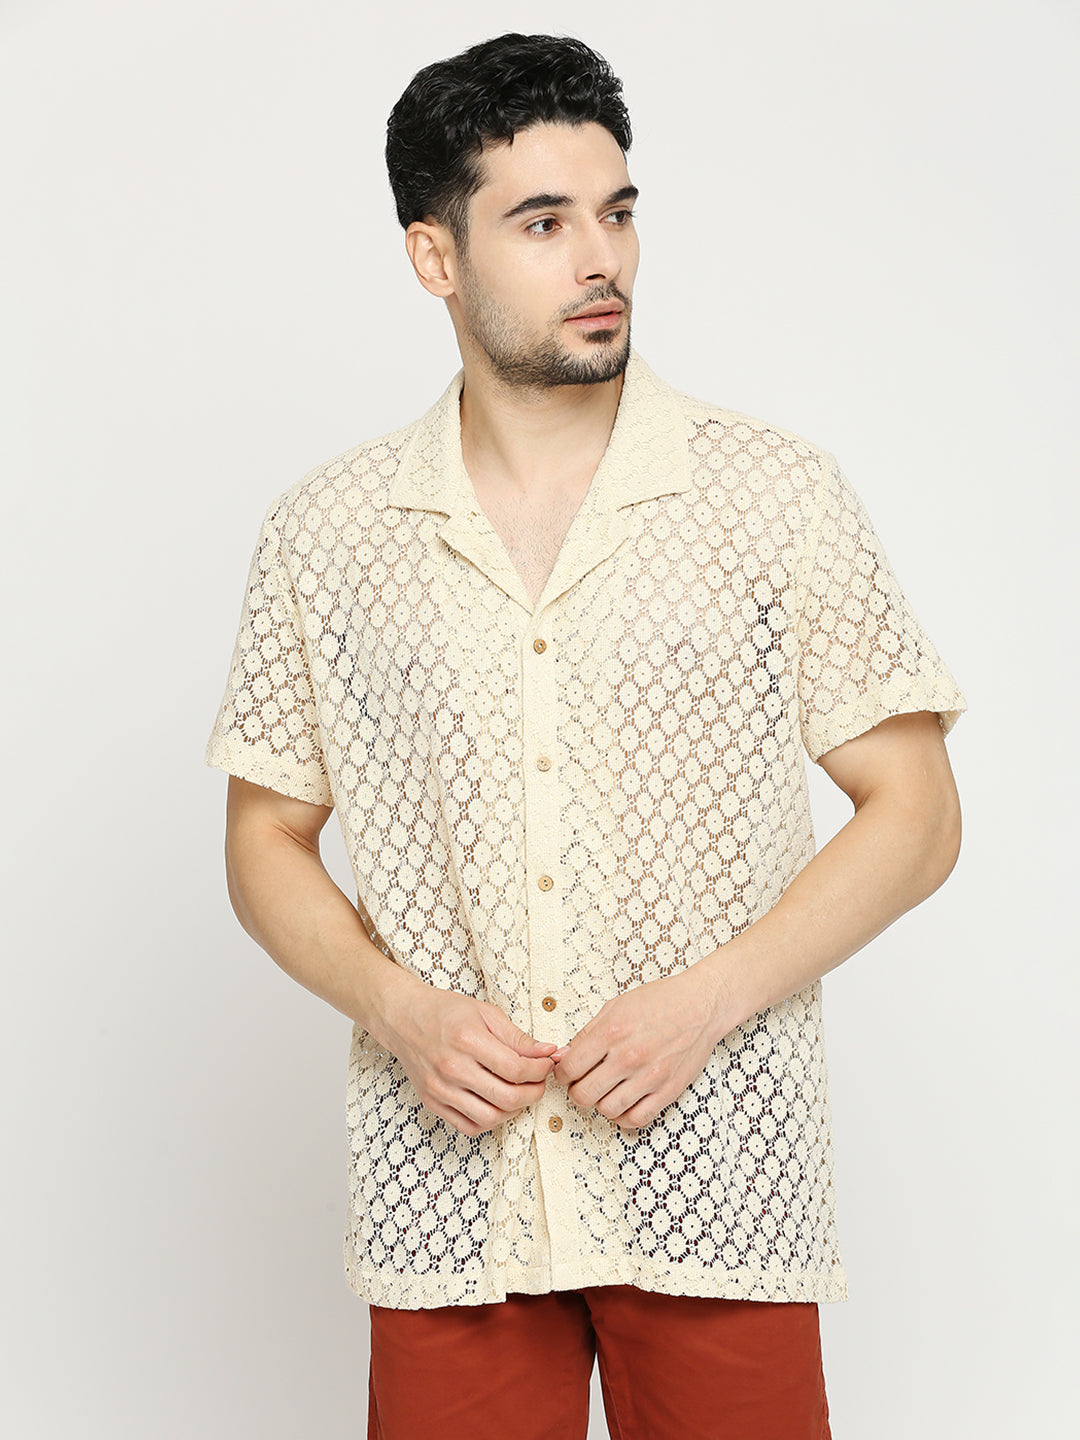 Buy Blamblack Men'S Crochet Lace Textured Oversized Fit Half Sleeves Cuban Collar Shirt